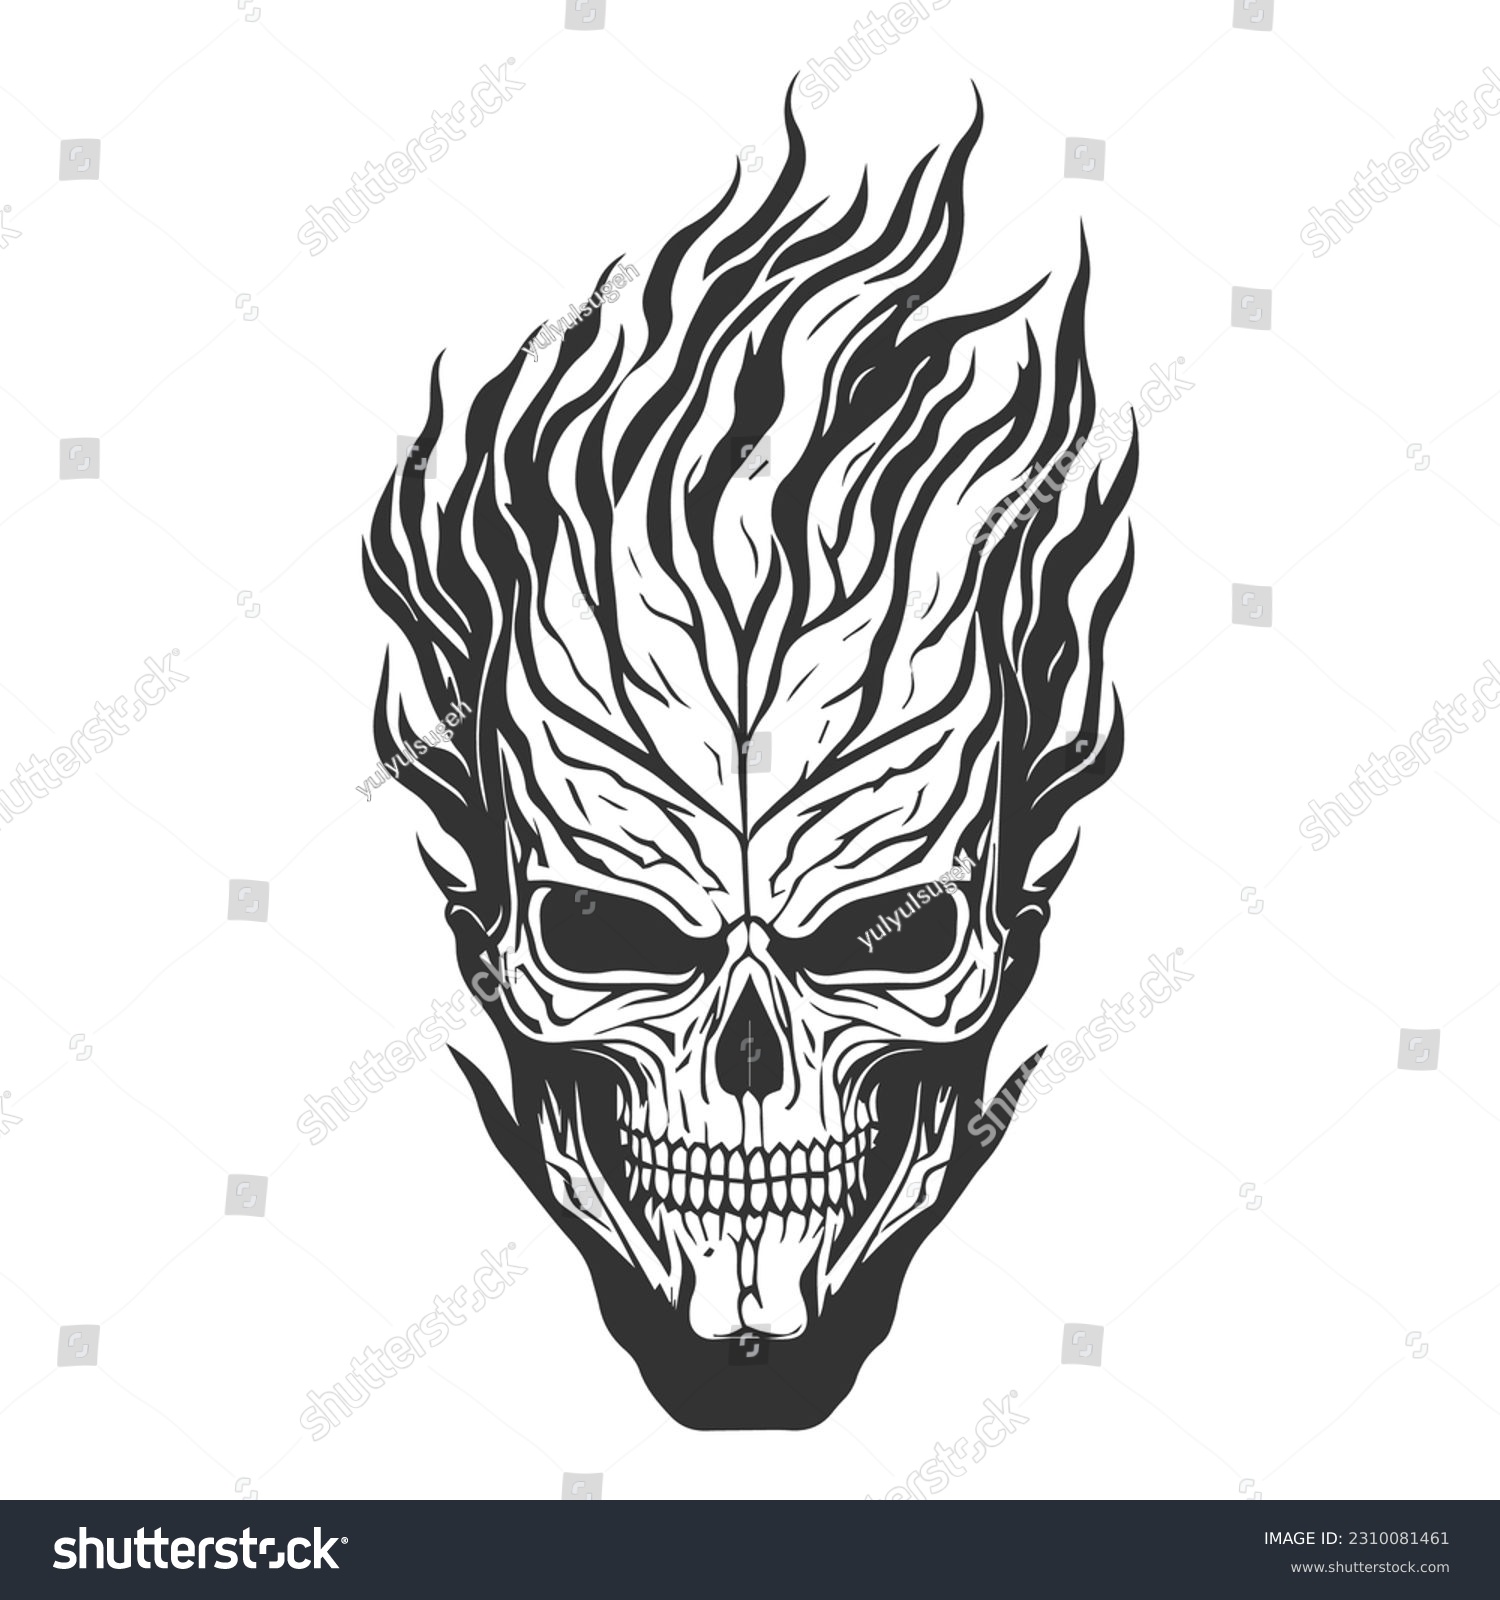 Fiery skull crest. Typical motorcycle gang skull logo #2310081461